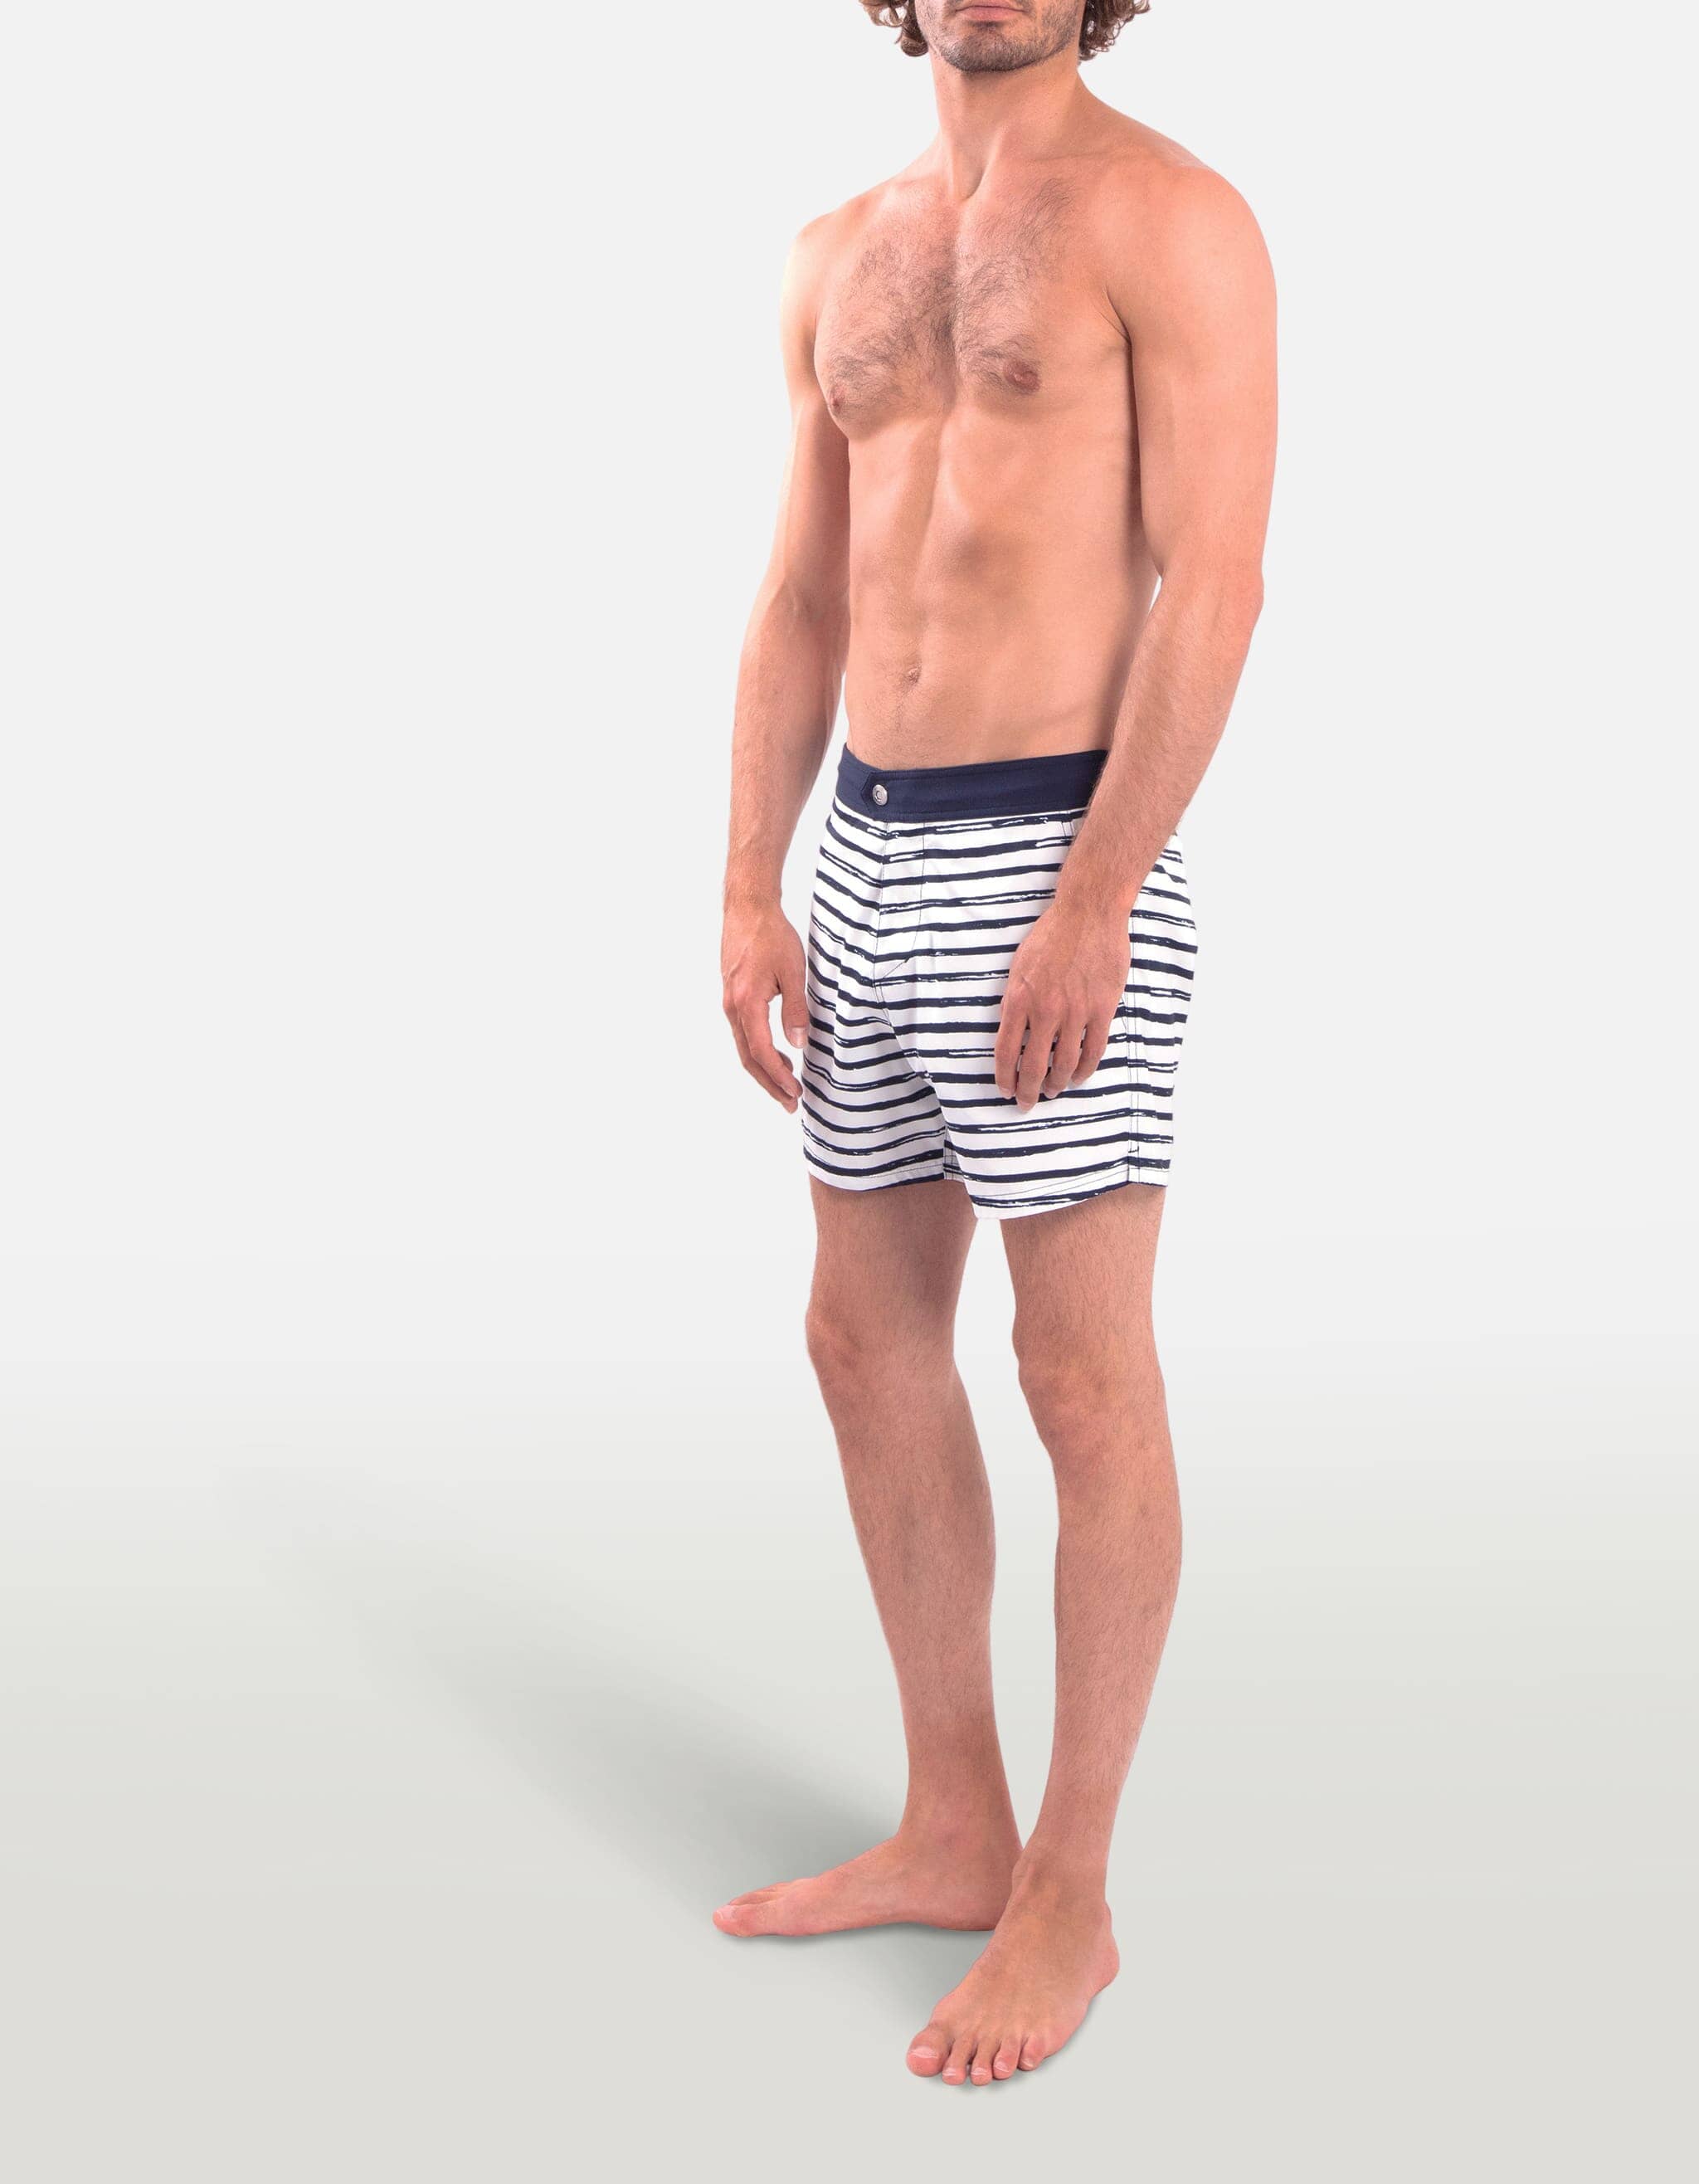 Ben - P25. Shima Grey Swim Shorts - Ben MACKEENE 